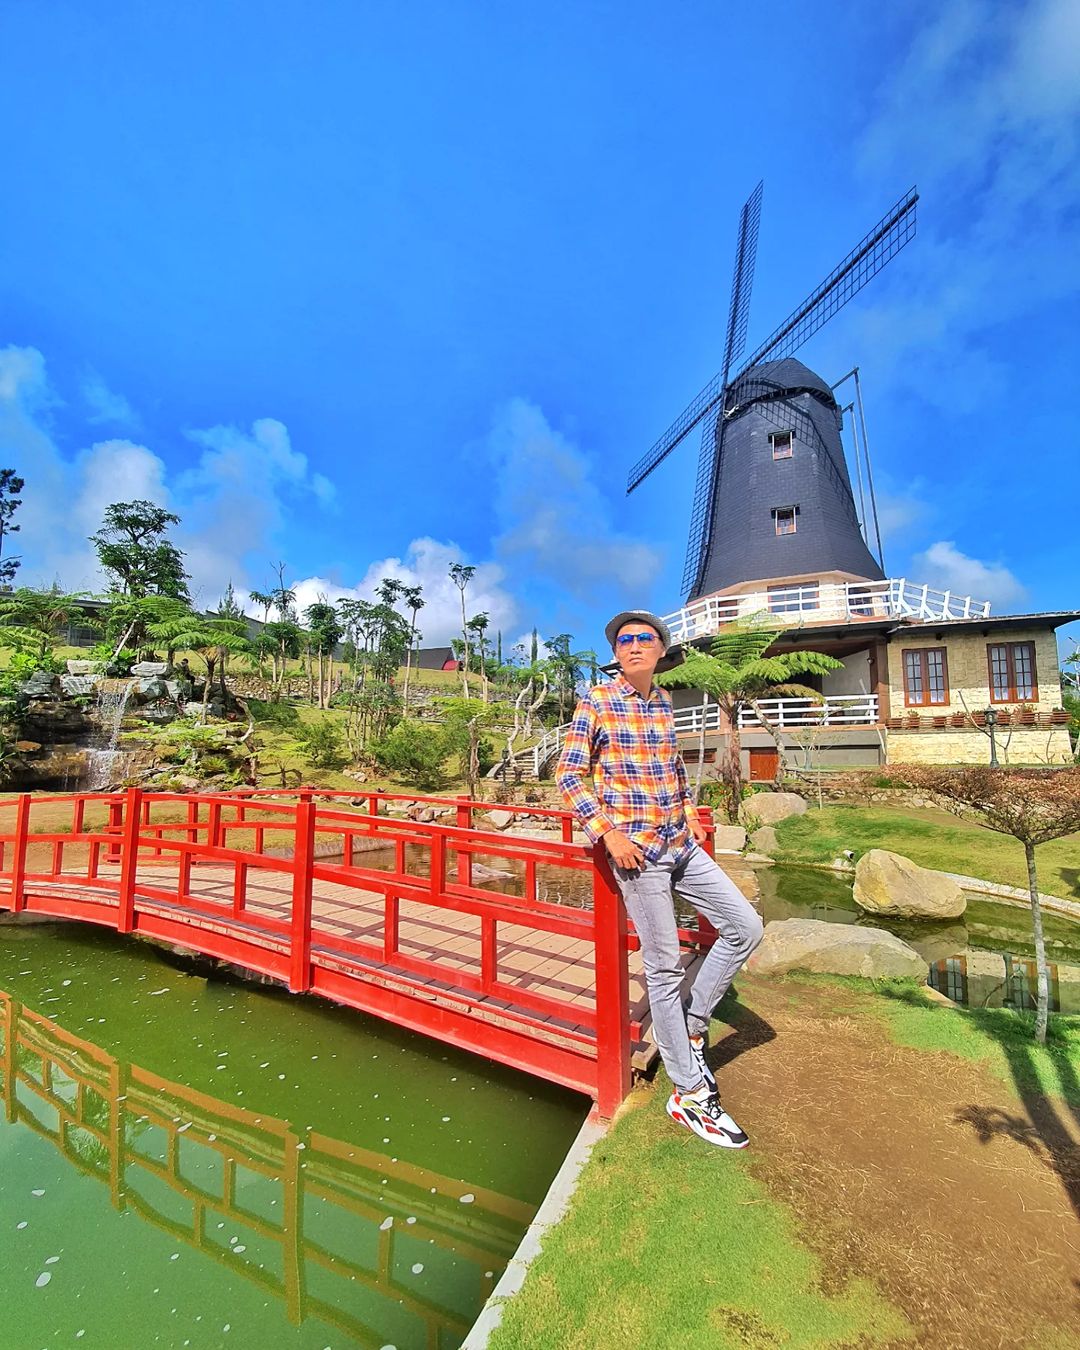 Jam Buka Loken Resort Karo Image From @castro_erwin